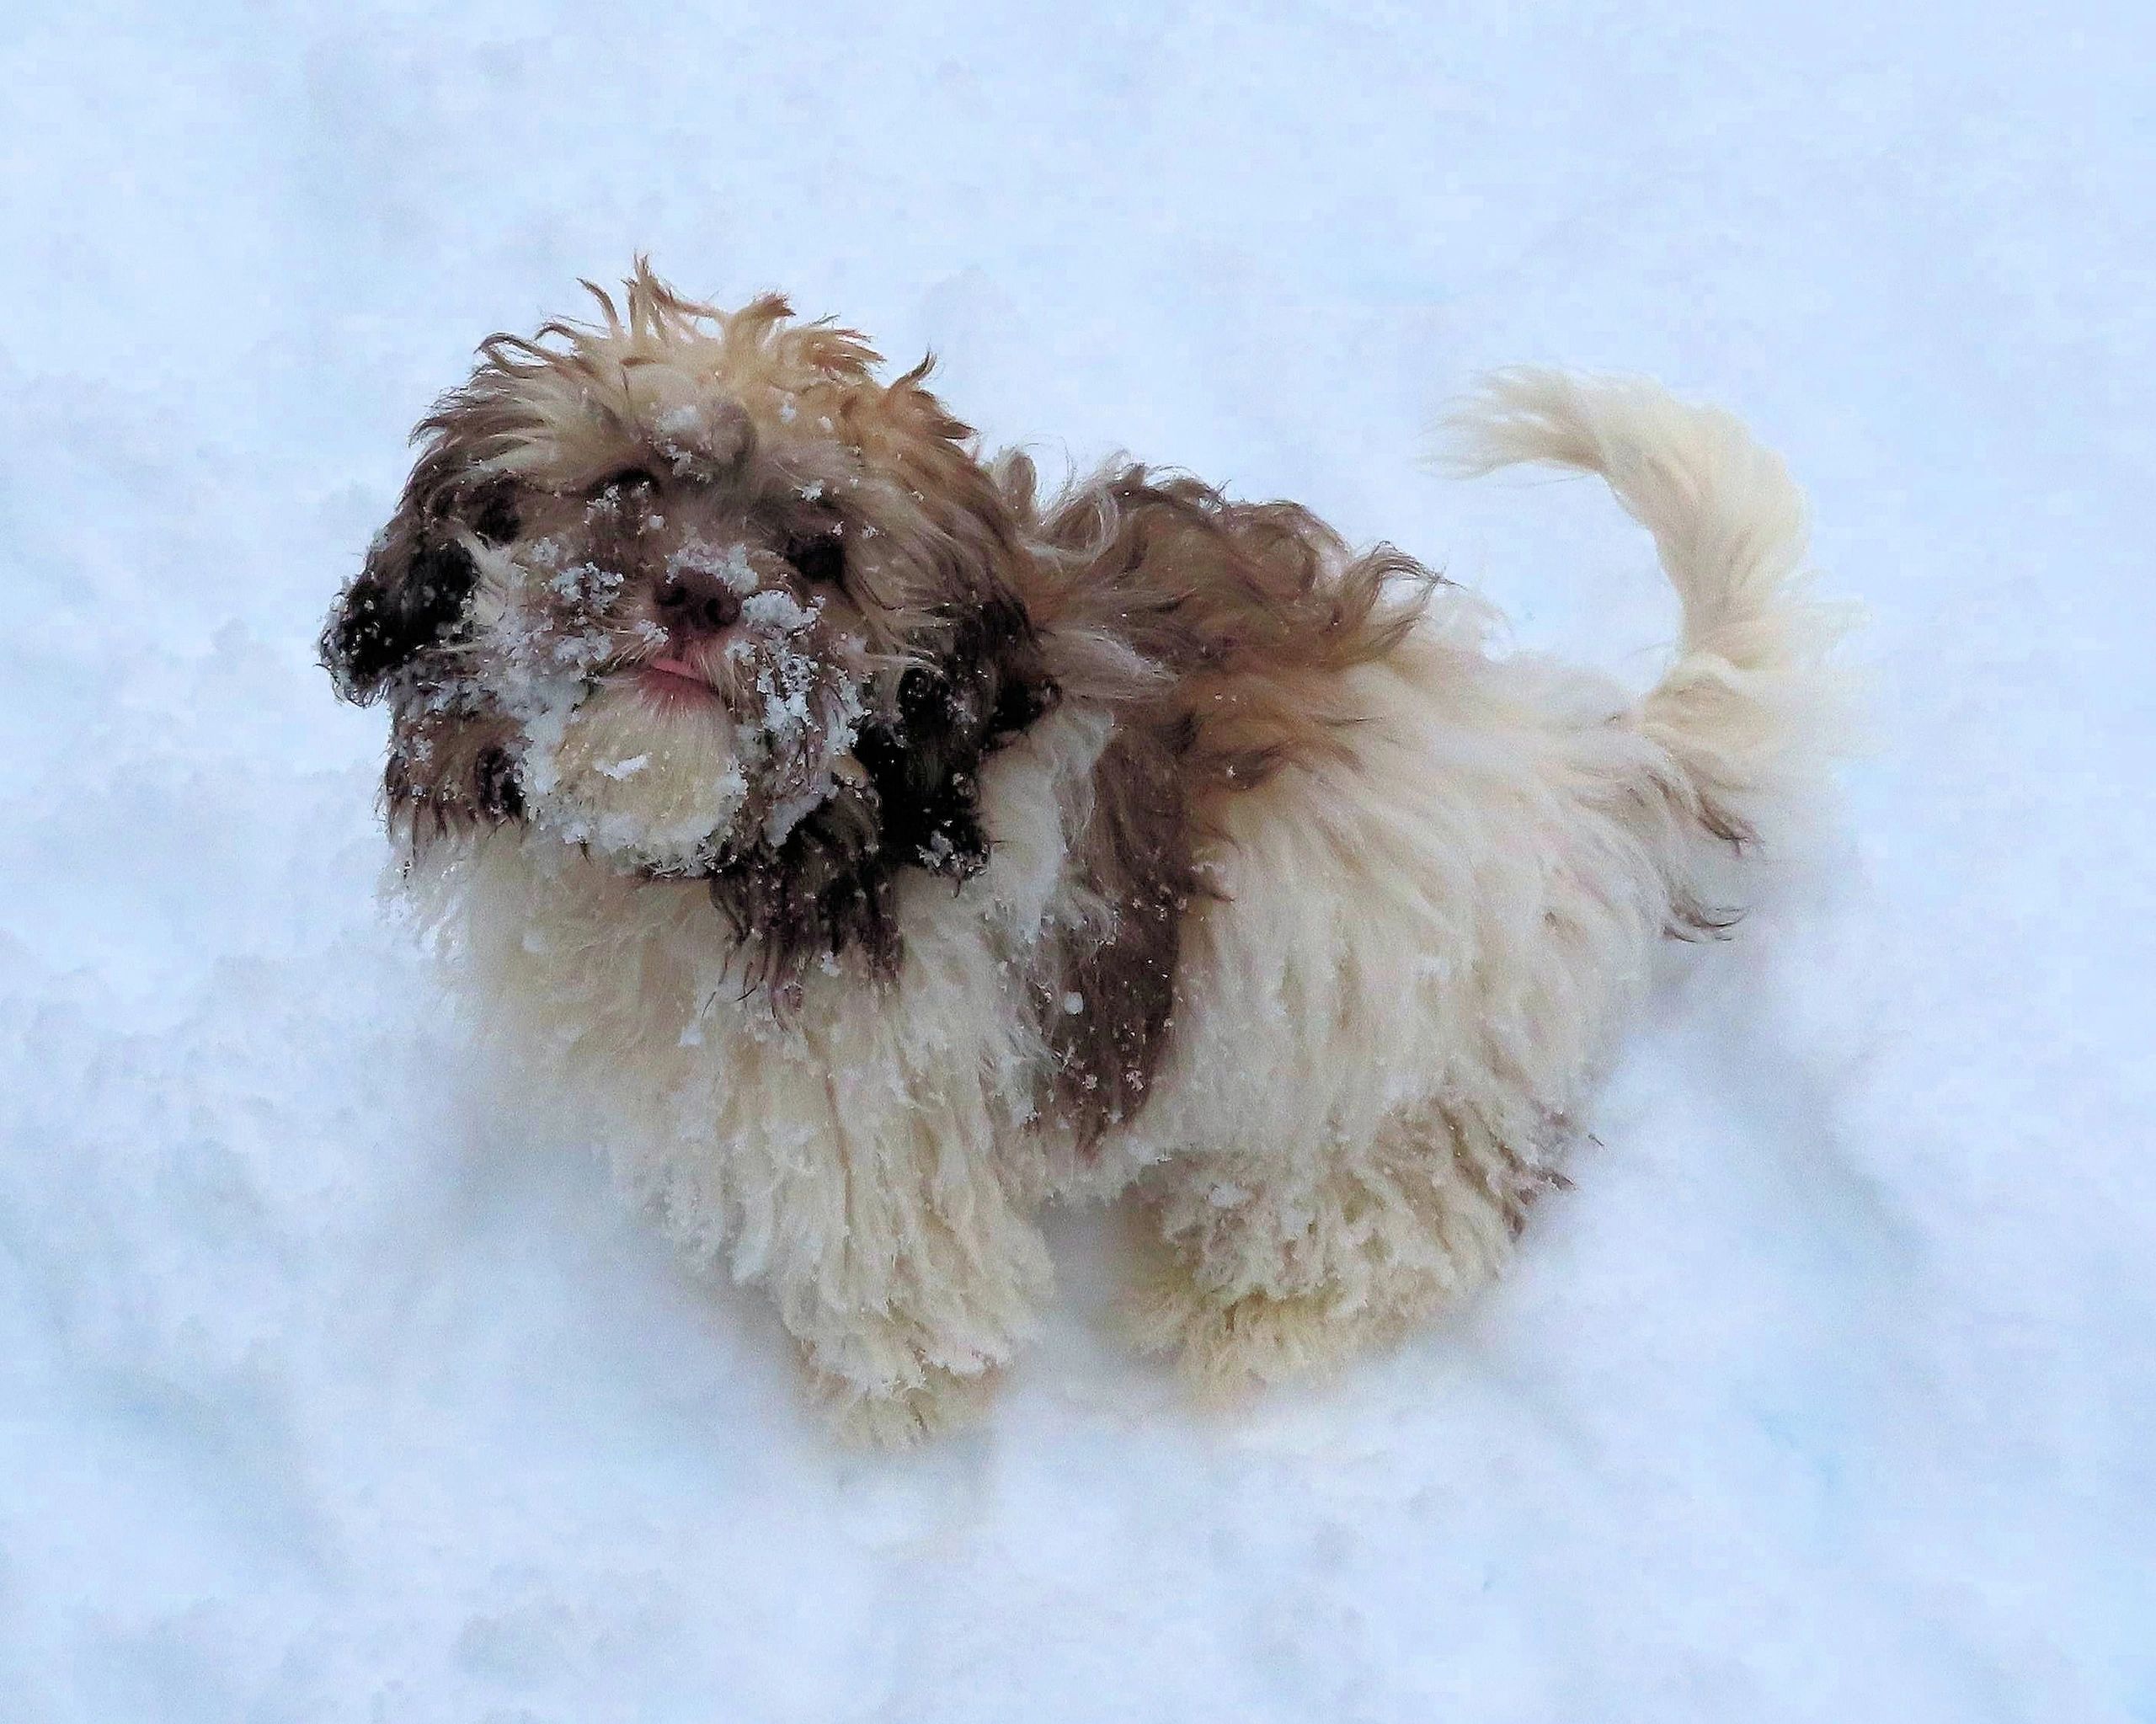 Teddy Bear puppy with an adorable snowy face Vancouver Island Canada Zuchon Shichon Shih Tzu Bichon